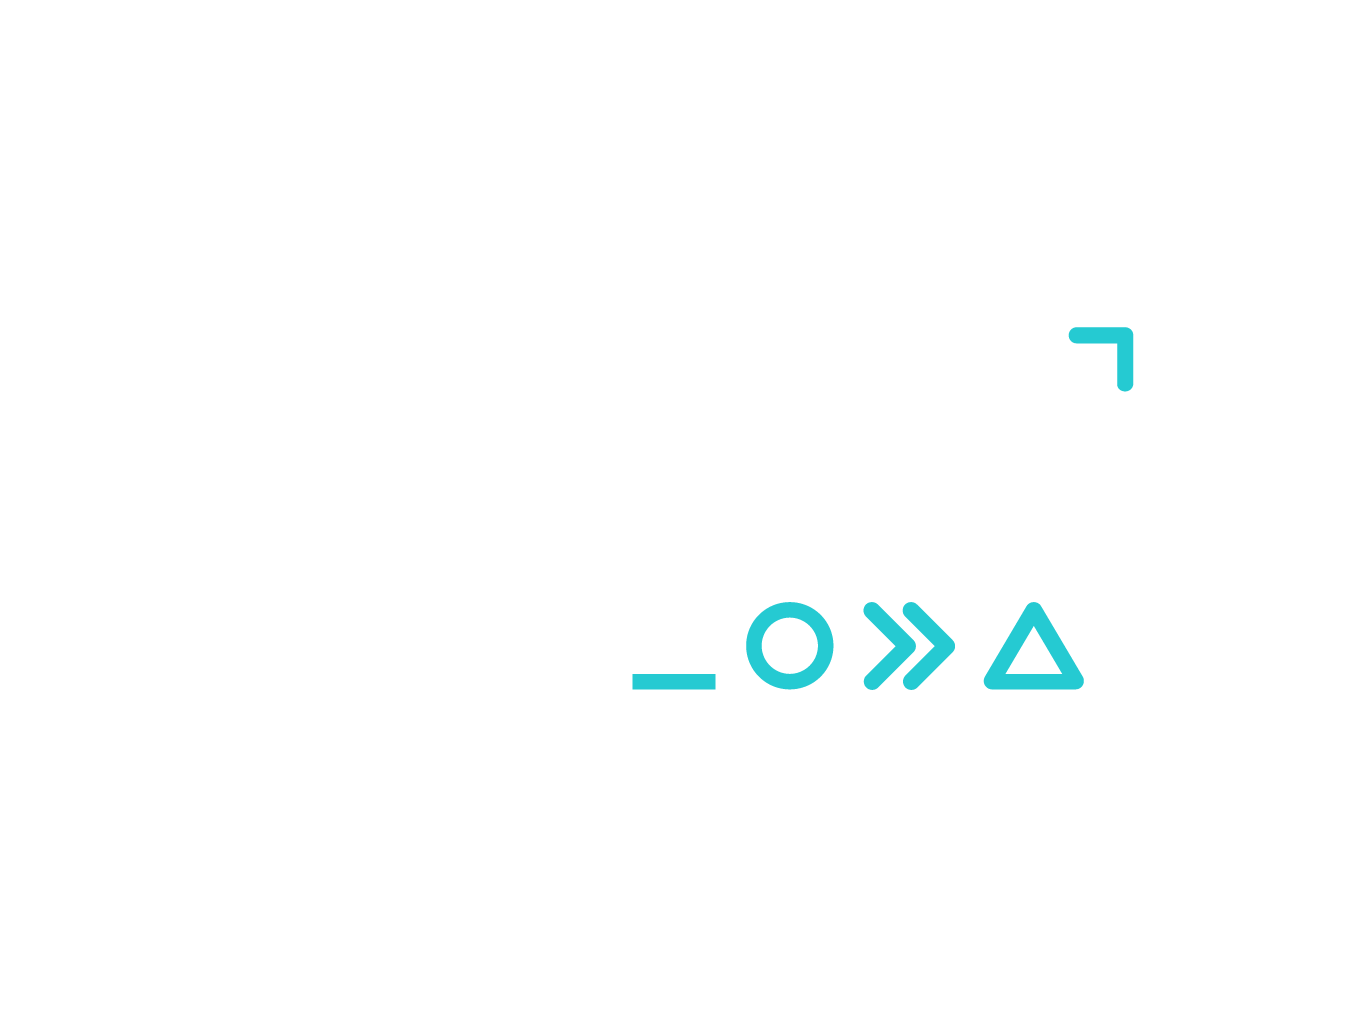 Imagine group